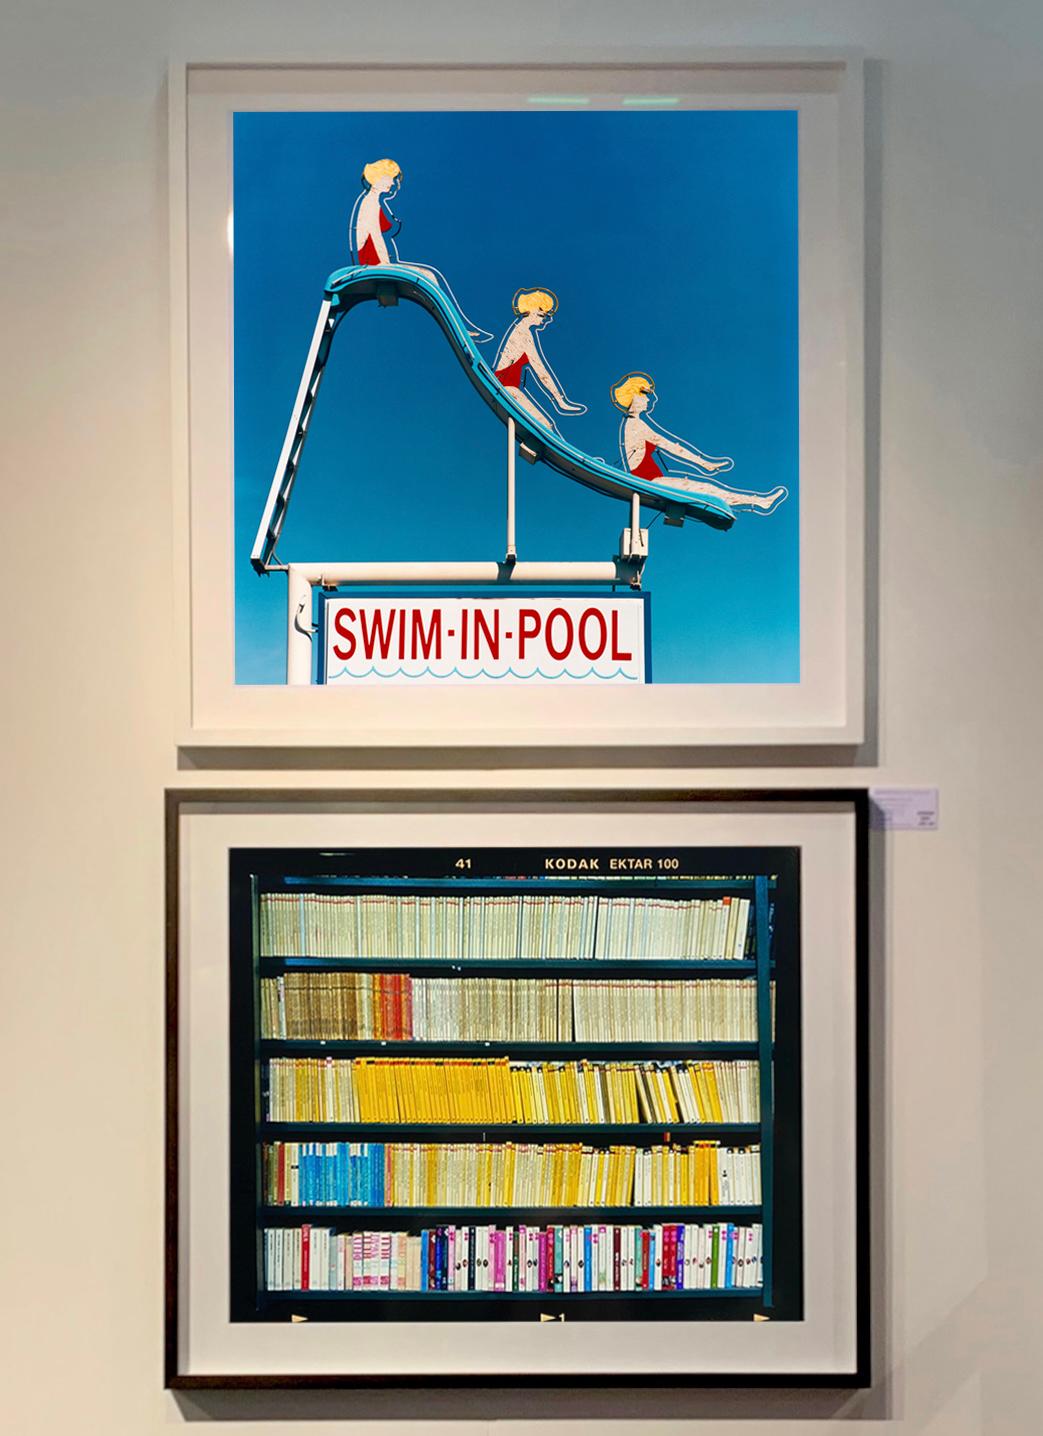 Swim-in-Pool, Las Vegas, Nevada - Americana Pop Art Farbfotografie (Pop-Art), Print, von Richard Heeps